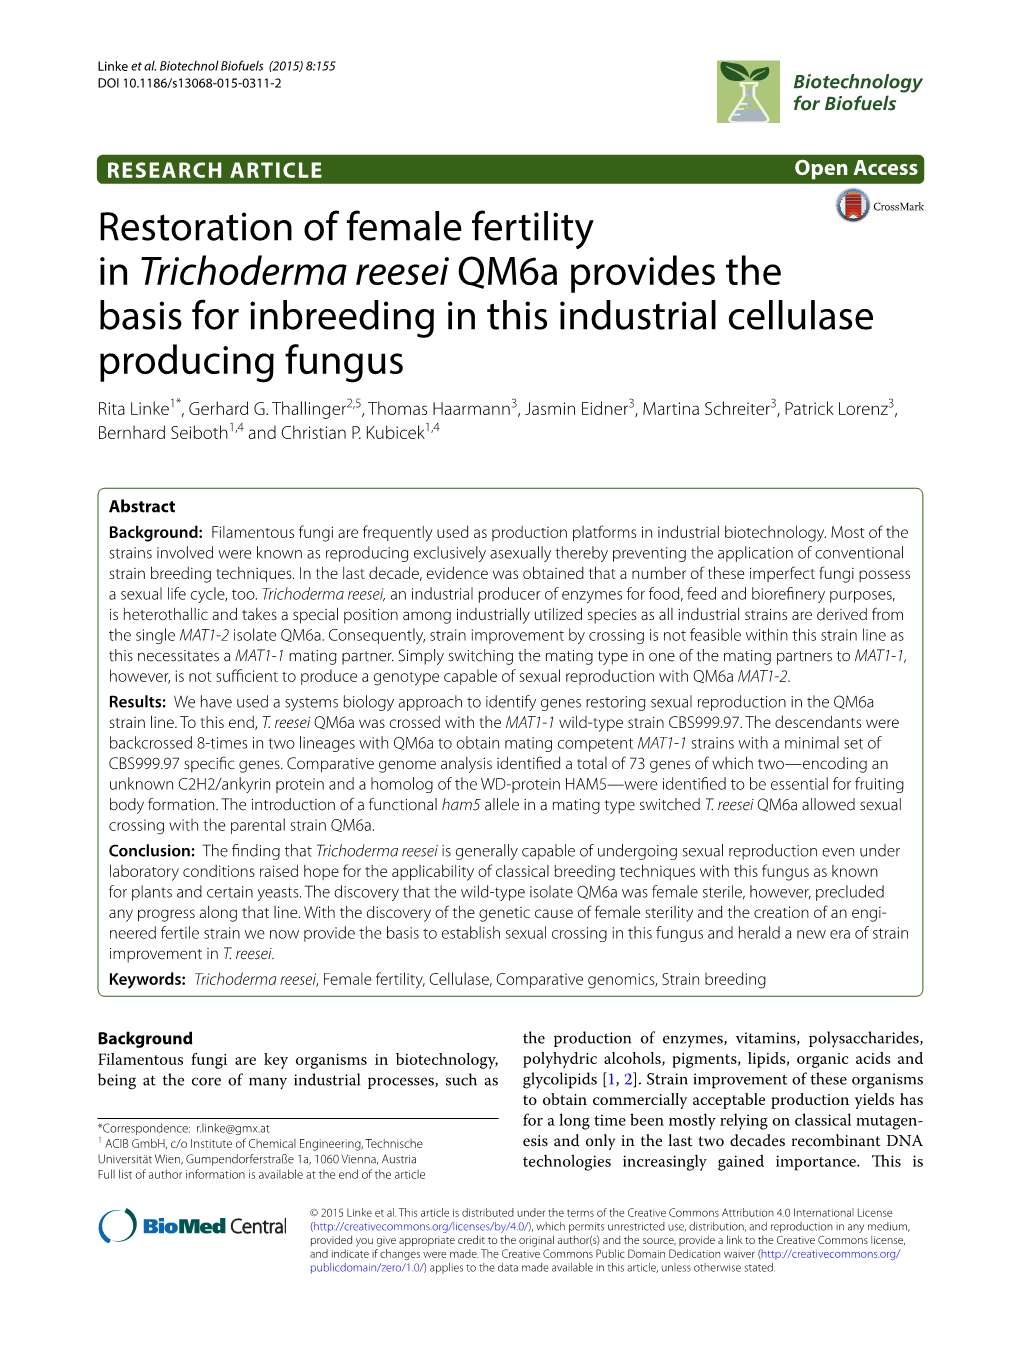 Trichoderma Reesei Qm6a Provides the Basis for Inbreeding in This Industrial Cellulase Producing Fungus Rita Linke1*, Gerhard G